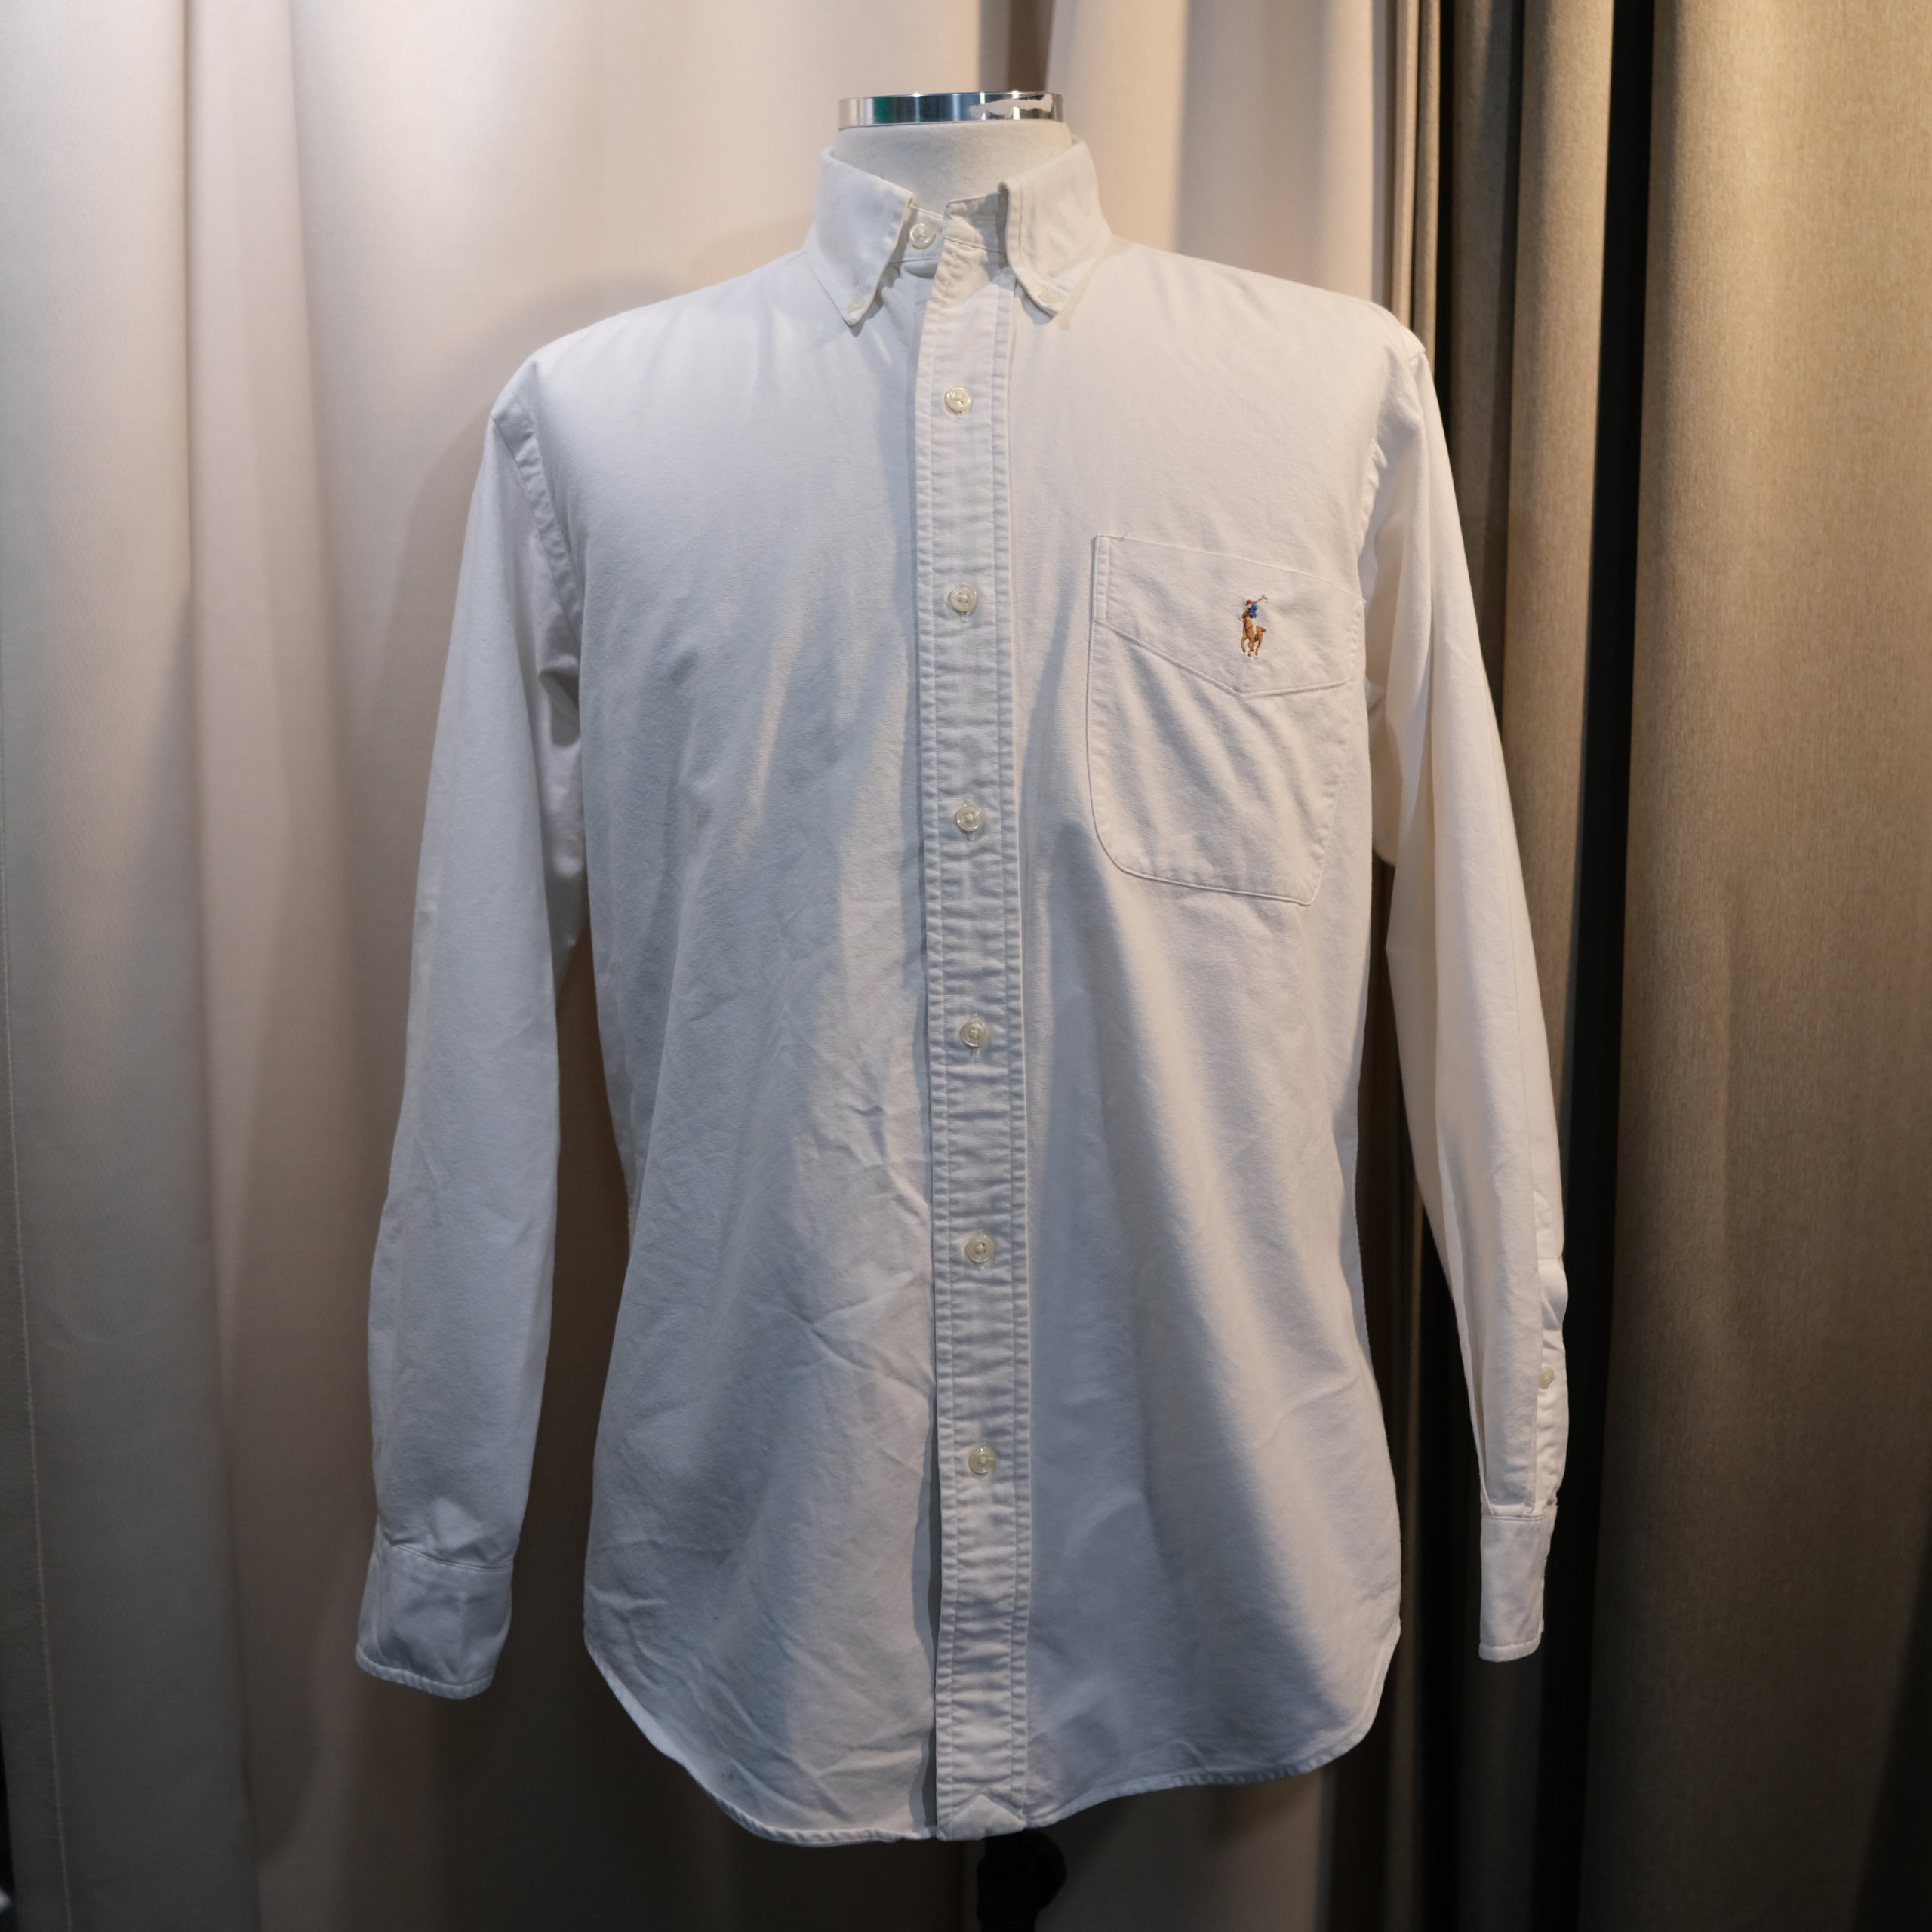 Polo Ralph Lauren classic fit shirts